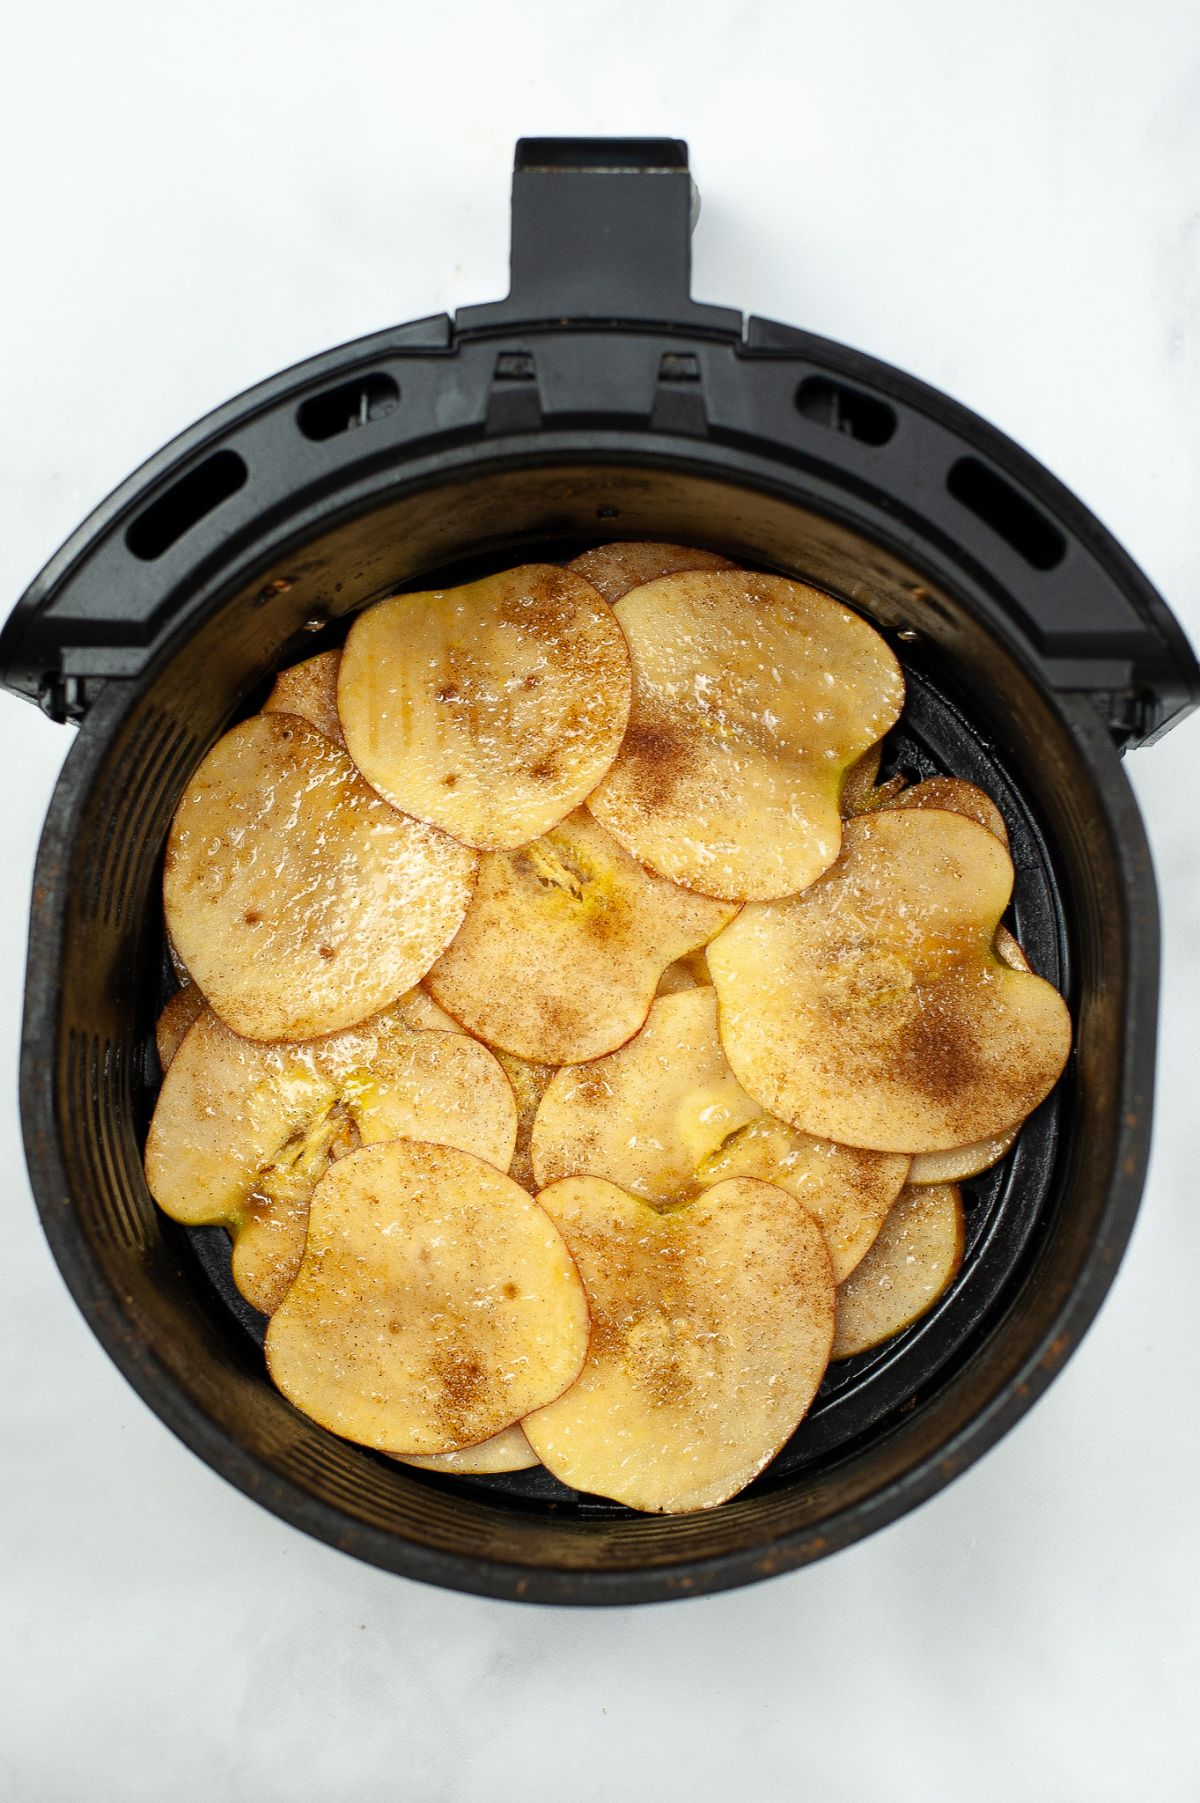 Cooked Air Fryer Cinnamon Apple Chips in an air fryer basket.